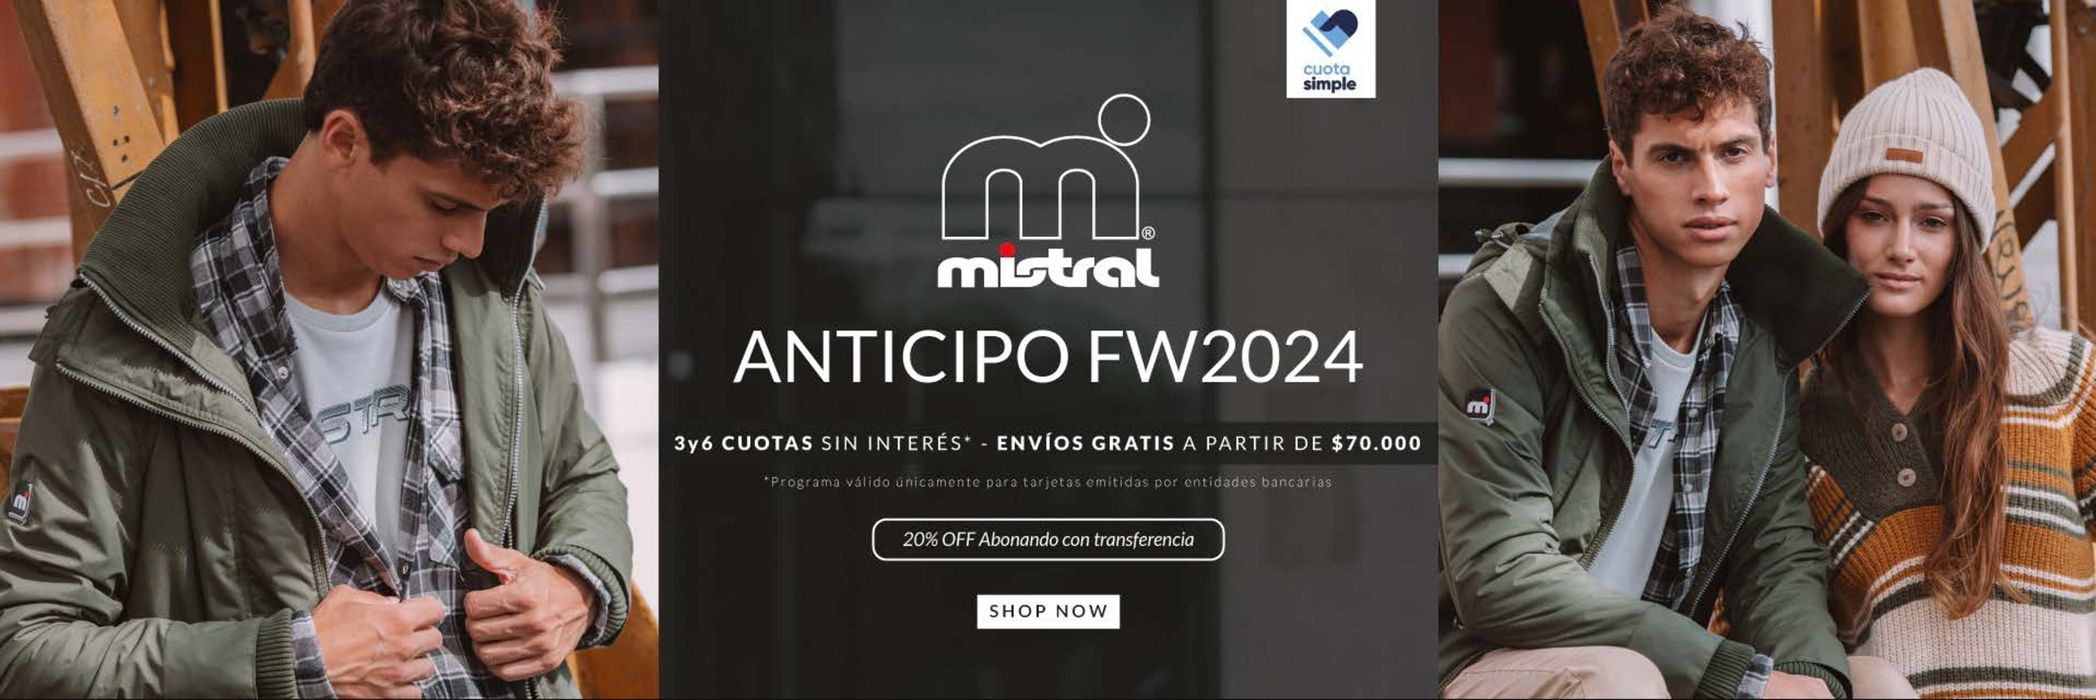 Catálogo Mistral en Cipolletti | Anticipo FW2024 20% OFF con transferencia | 29/3/2024 - 29/4/2024